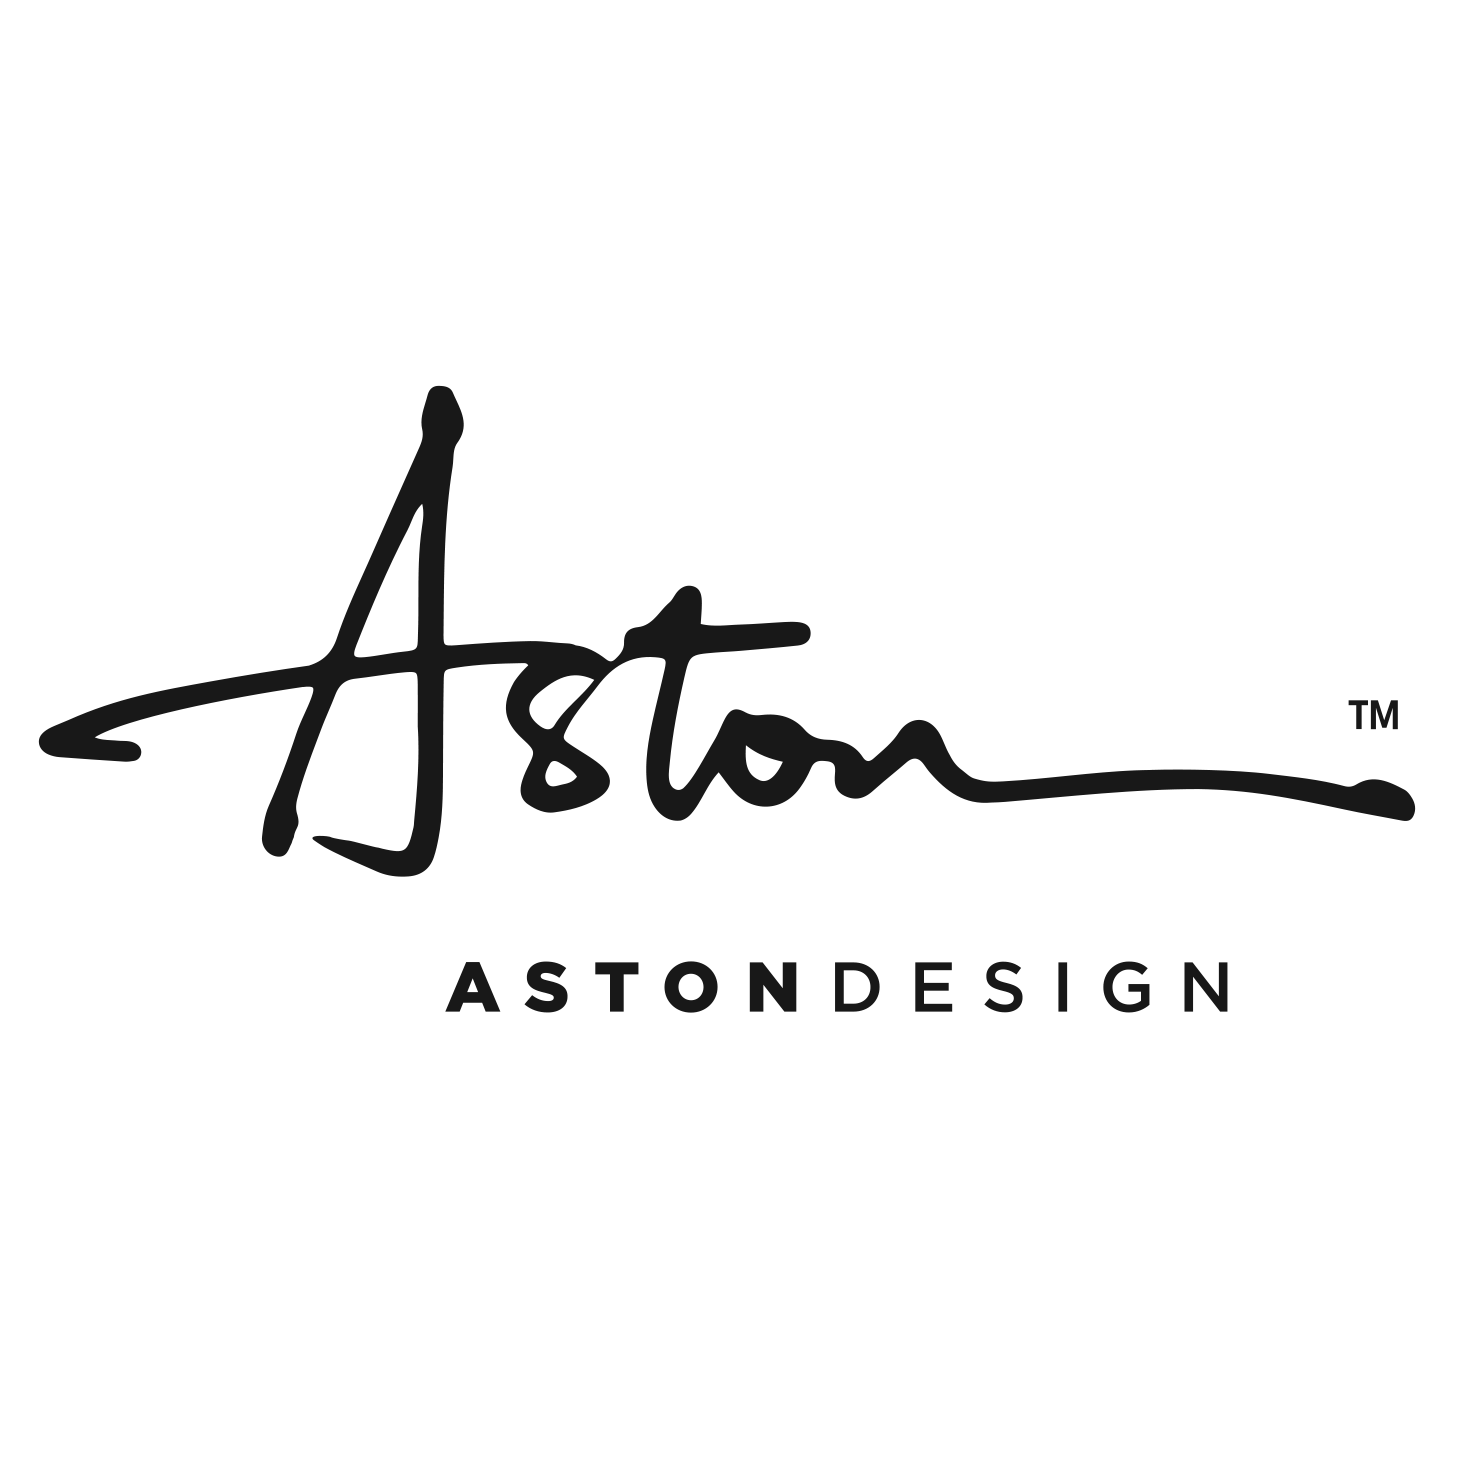 Aston Design Pte. Ltd. logo